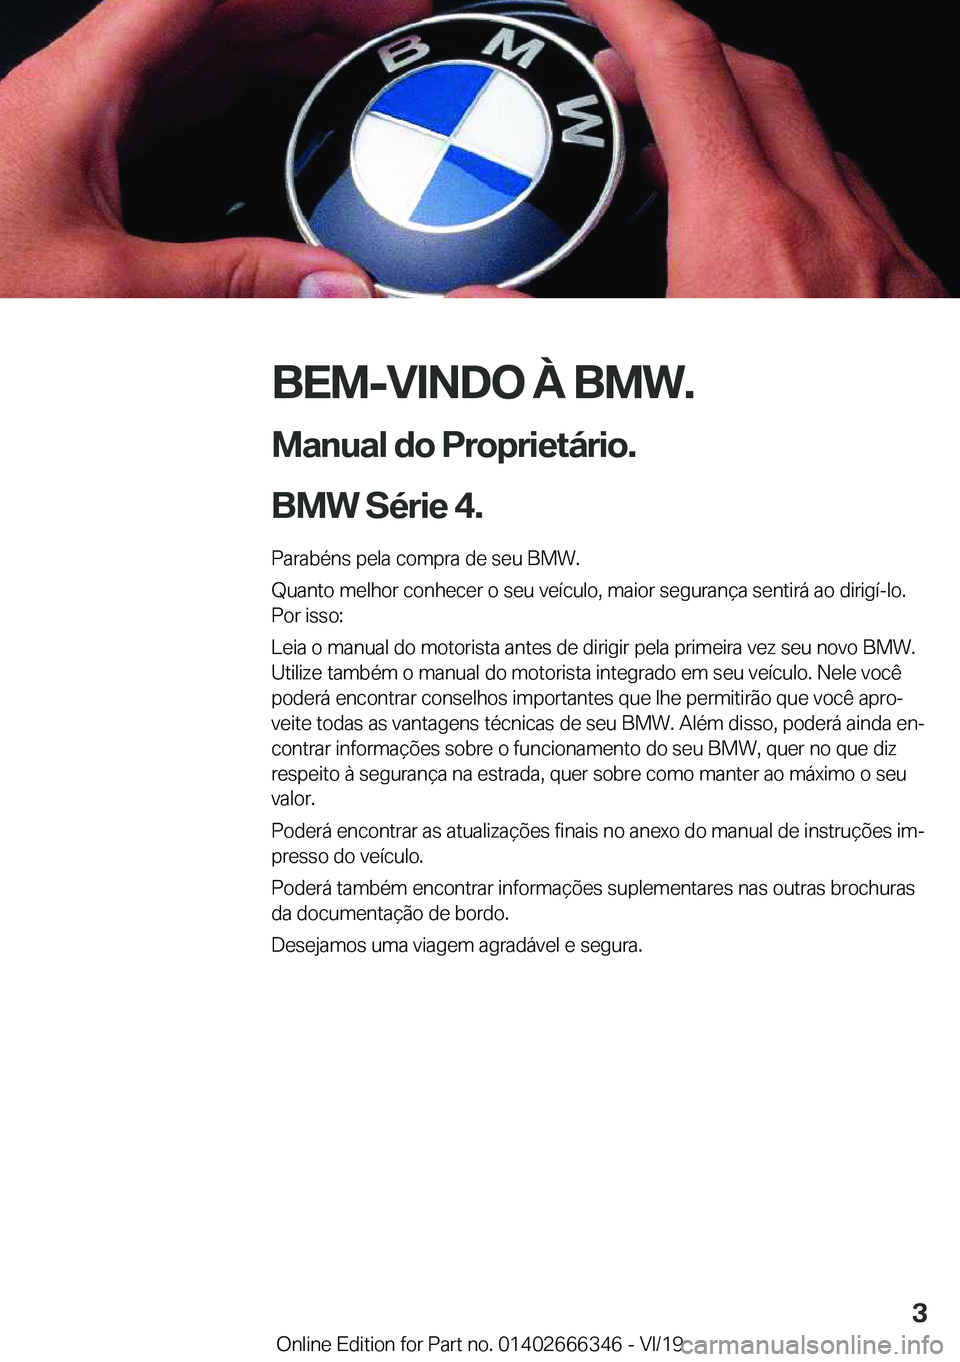 BMW 4 SERIES COUPE 2020  Manual do condutor (in Portuguese) �B�E�M�-�V�I�N�D�O��À��B�M�W�.
�M�a�n�u�a�l��d�o��P�r�o�p�r�i�e�t�á�r�i�o�.
�B�M�W��S�é�r�i�e��4�.� �P�a�r�a�b�é�n�s��p�e�l�a��c�o�m�p�r�a��d�e��s�e�u��B�M�W�.
�Q�u�a�n�t�o��m�e�l�h�o